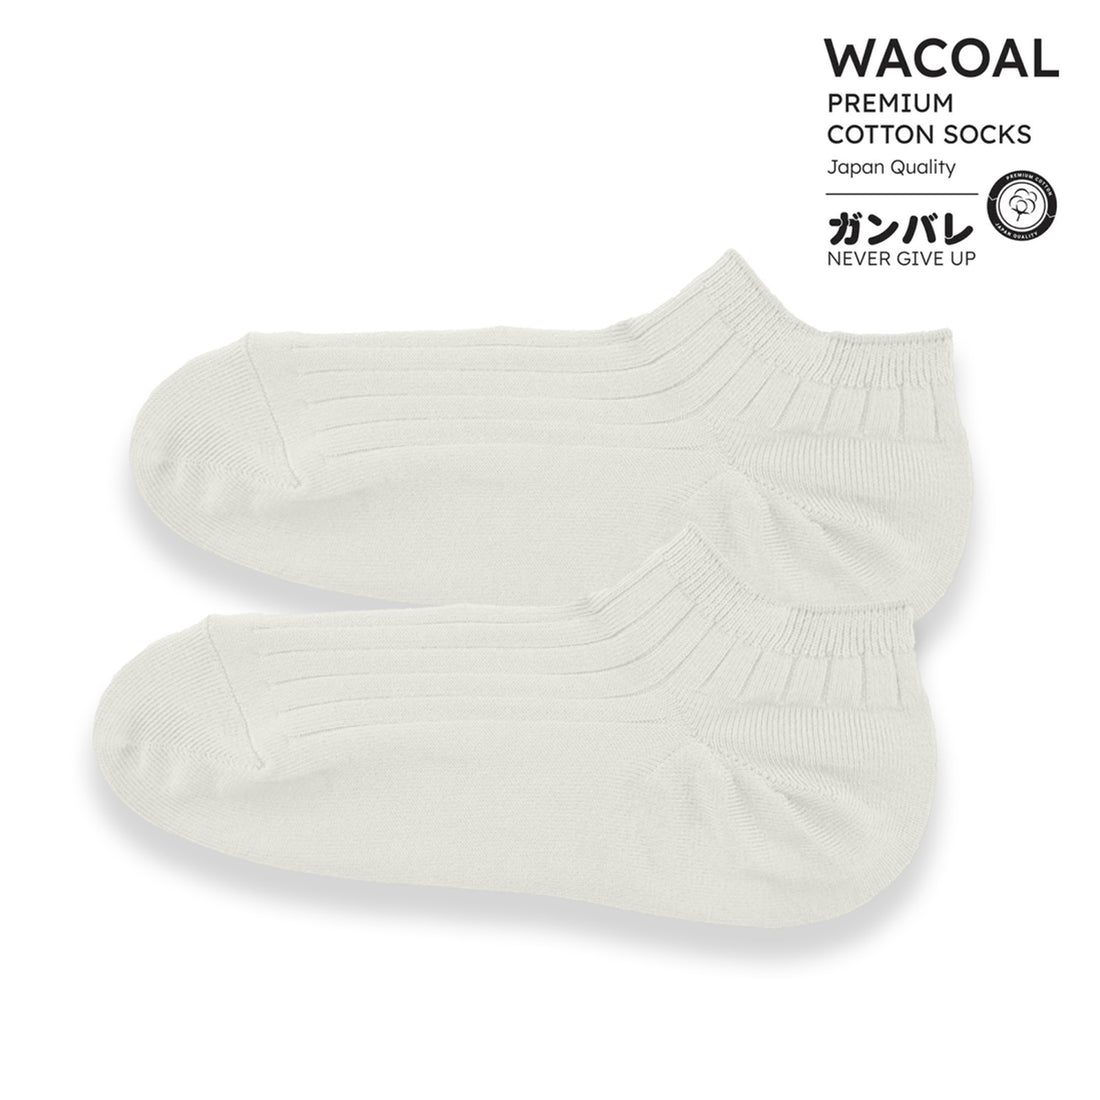 Cotton Socks Anti-bacteria, model WW1106, white (WH)